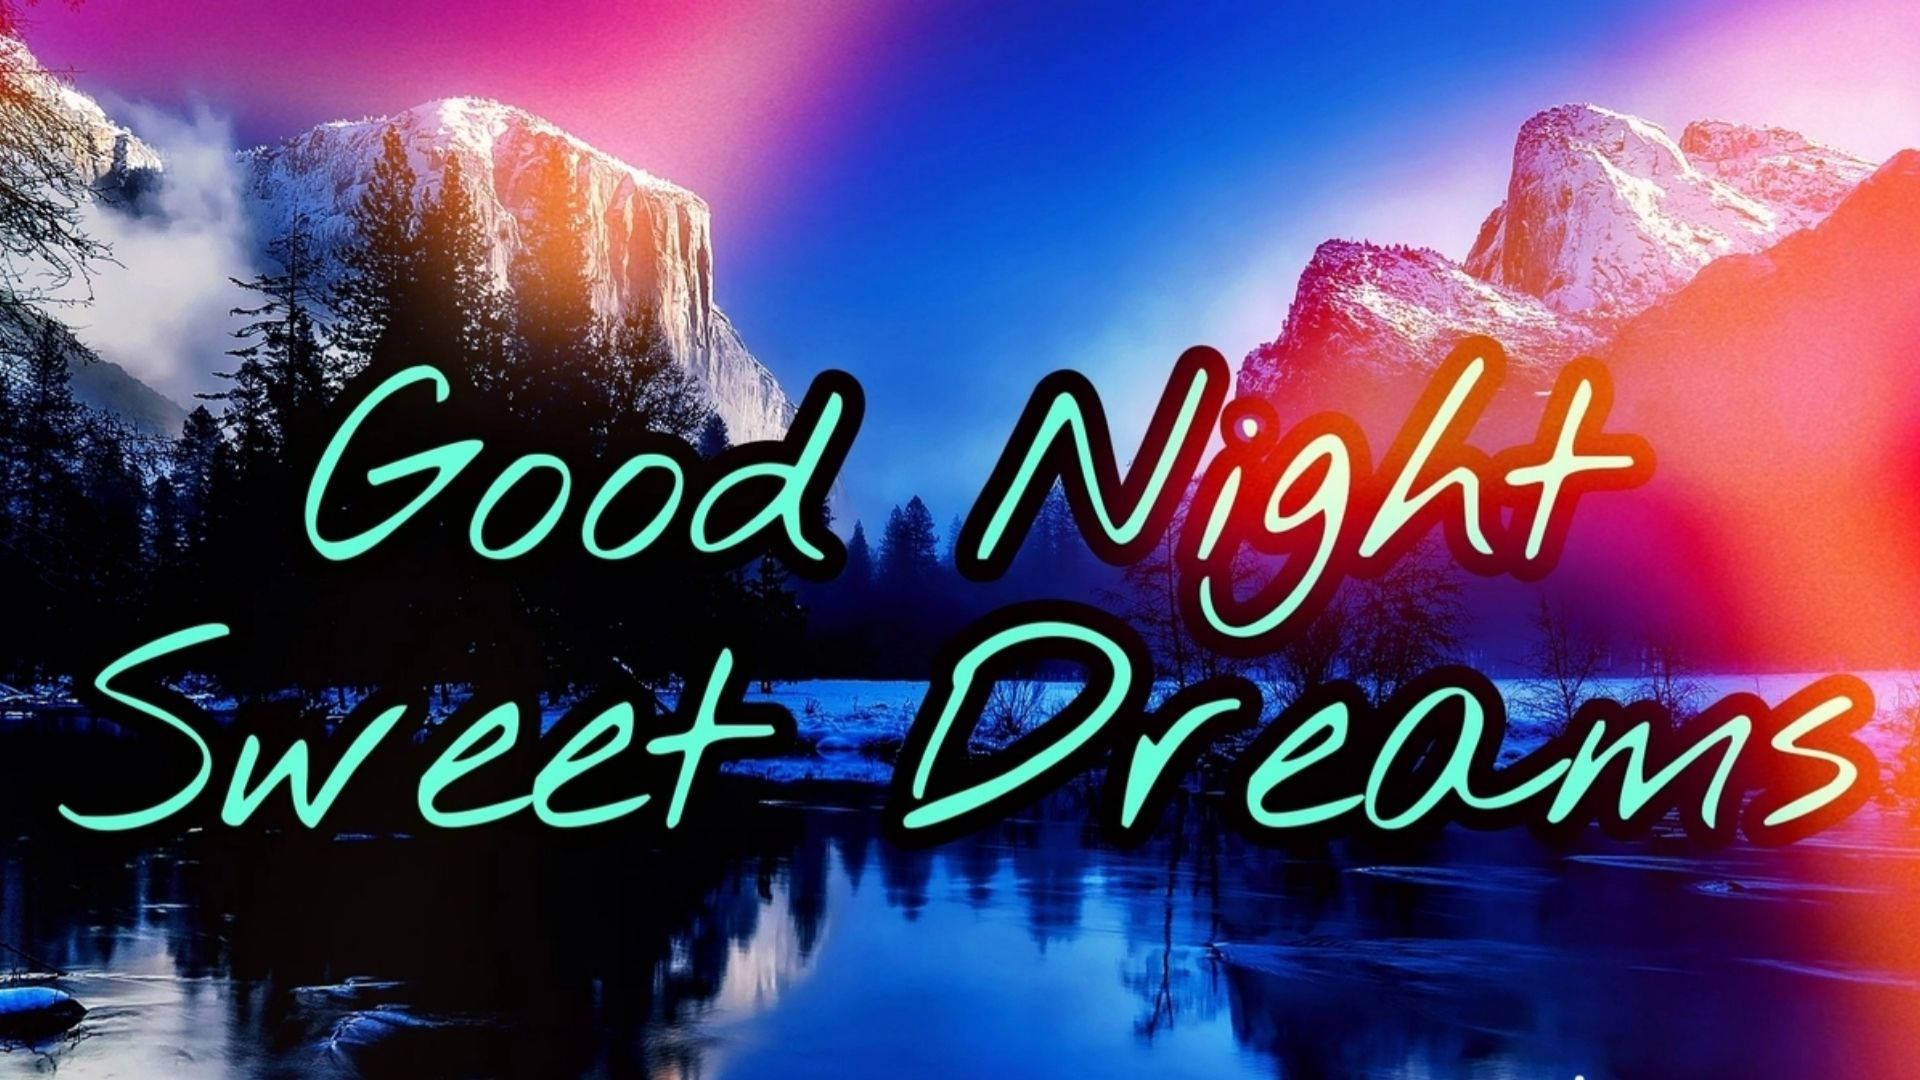 Good Night Sweet Dreams In Lake Background